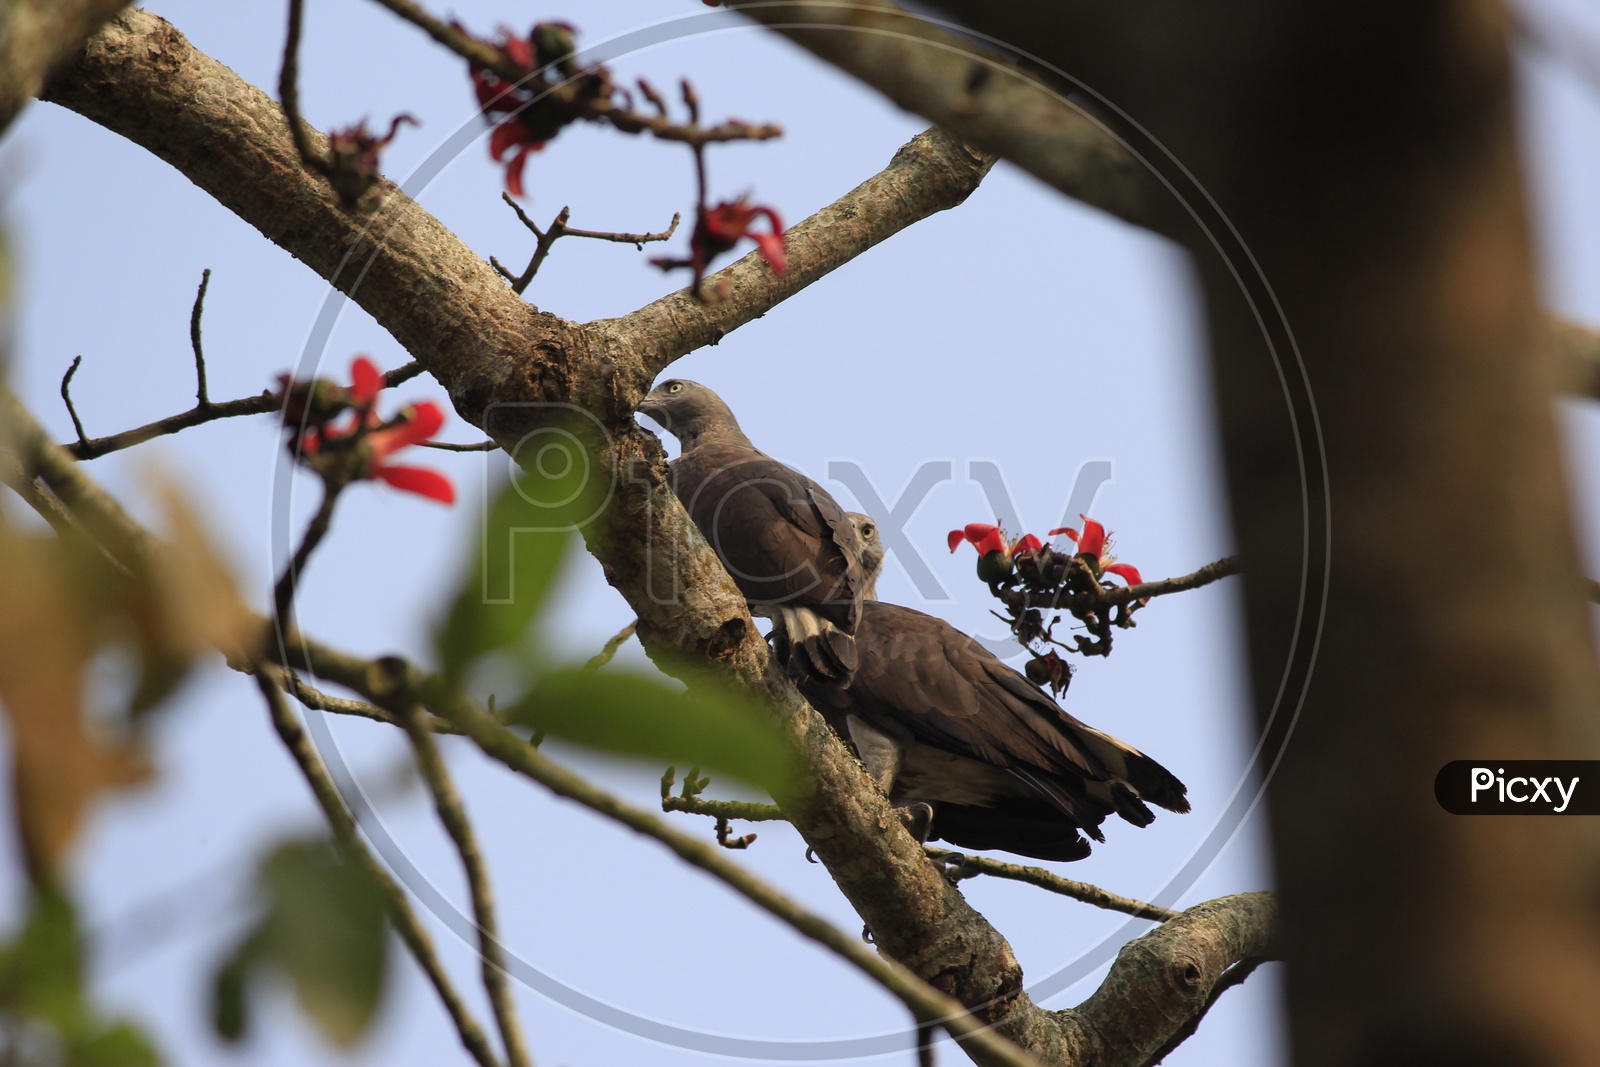 Wild life Sanctuary in Assam(Kaziranga national park).